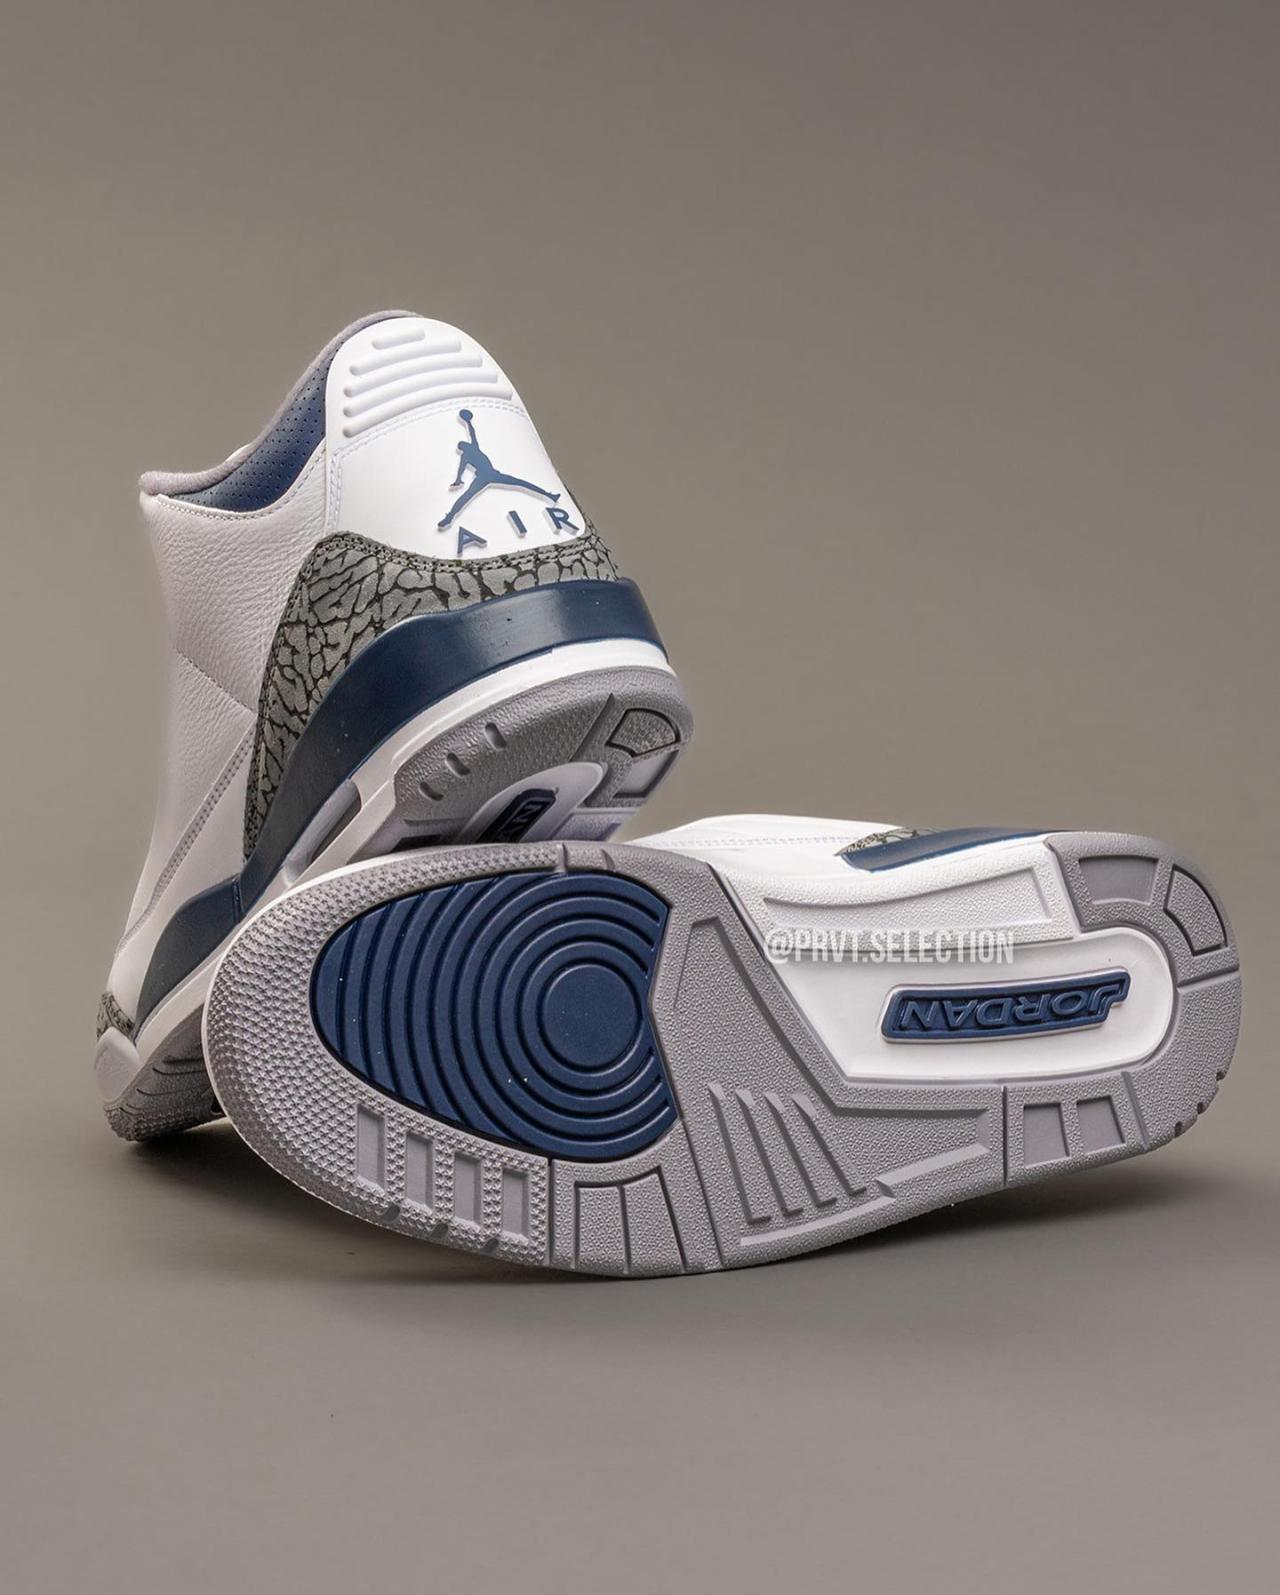 Midnight Navy, CT8532-140, AJ3, AJ, Air Jordan 3 - 明年AJ3首发鞋款如何评分？请留下您的上脚评价！